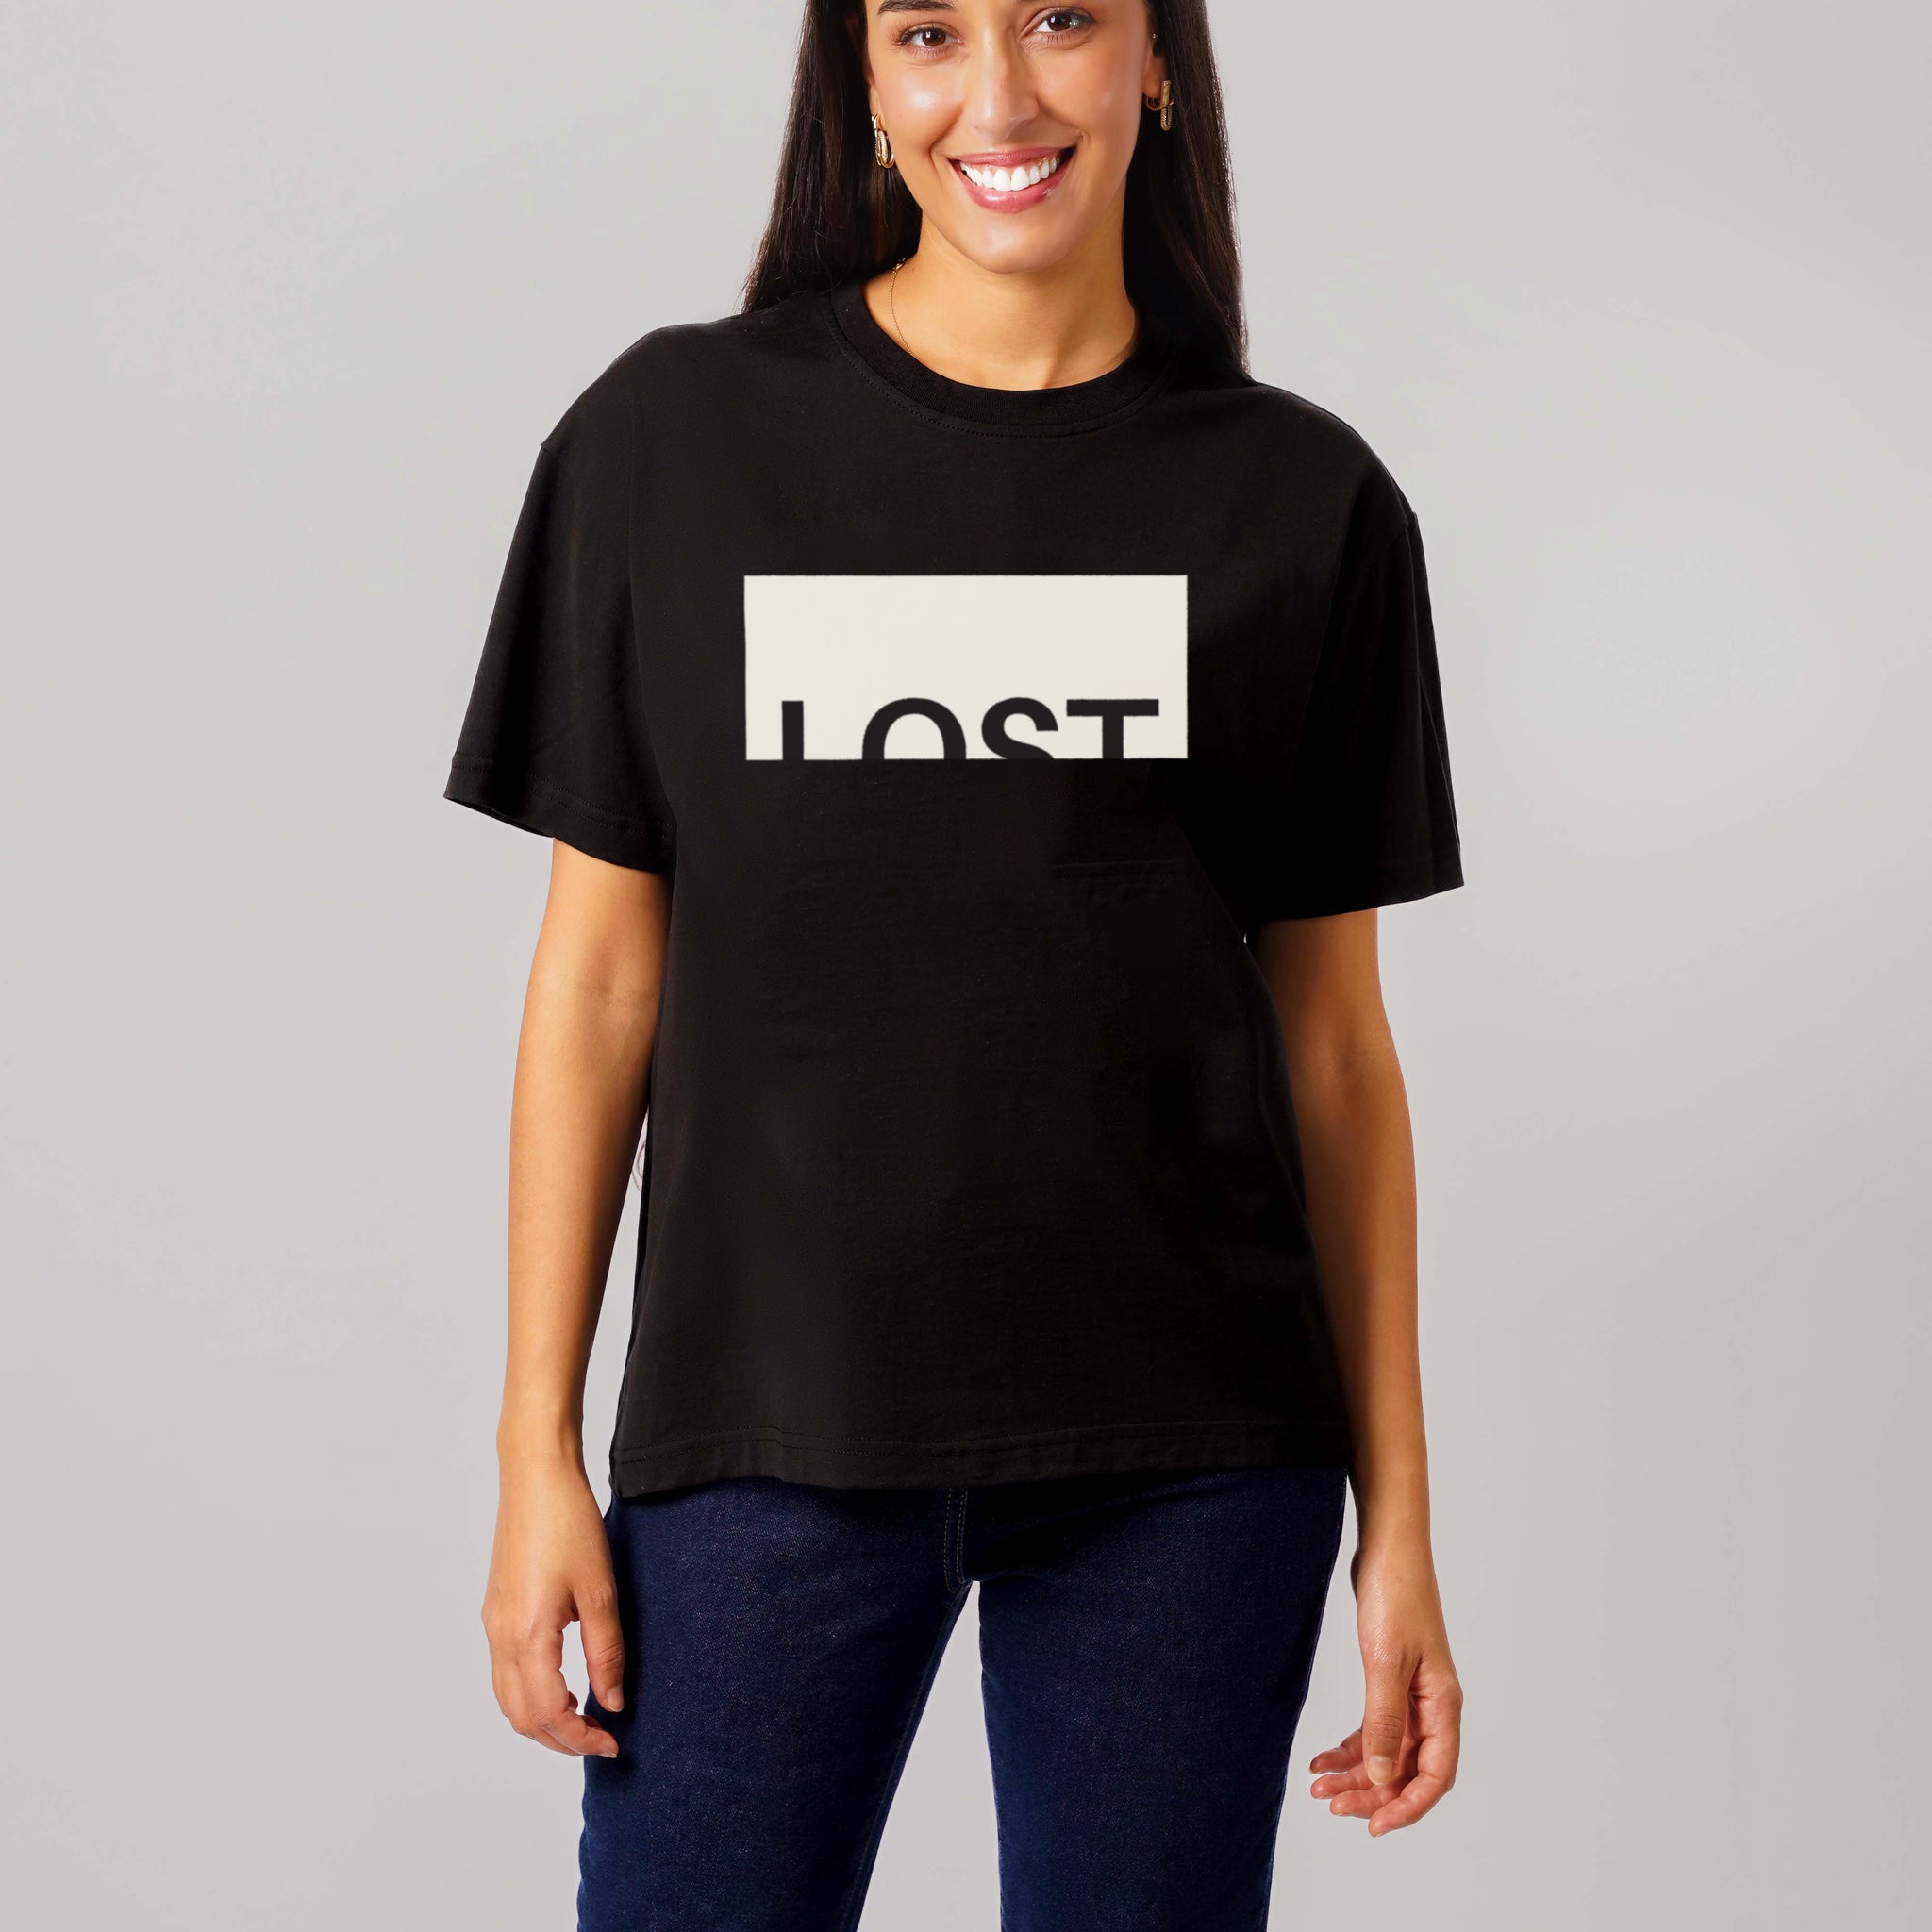 Lost T-Shirt Black Women